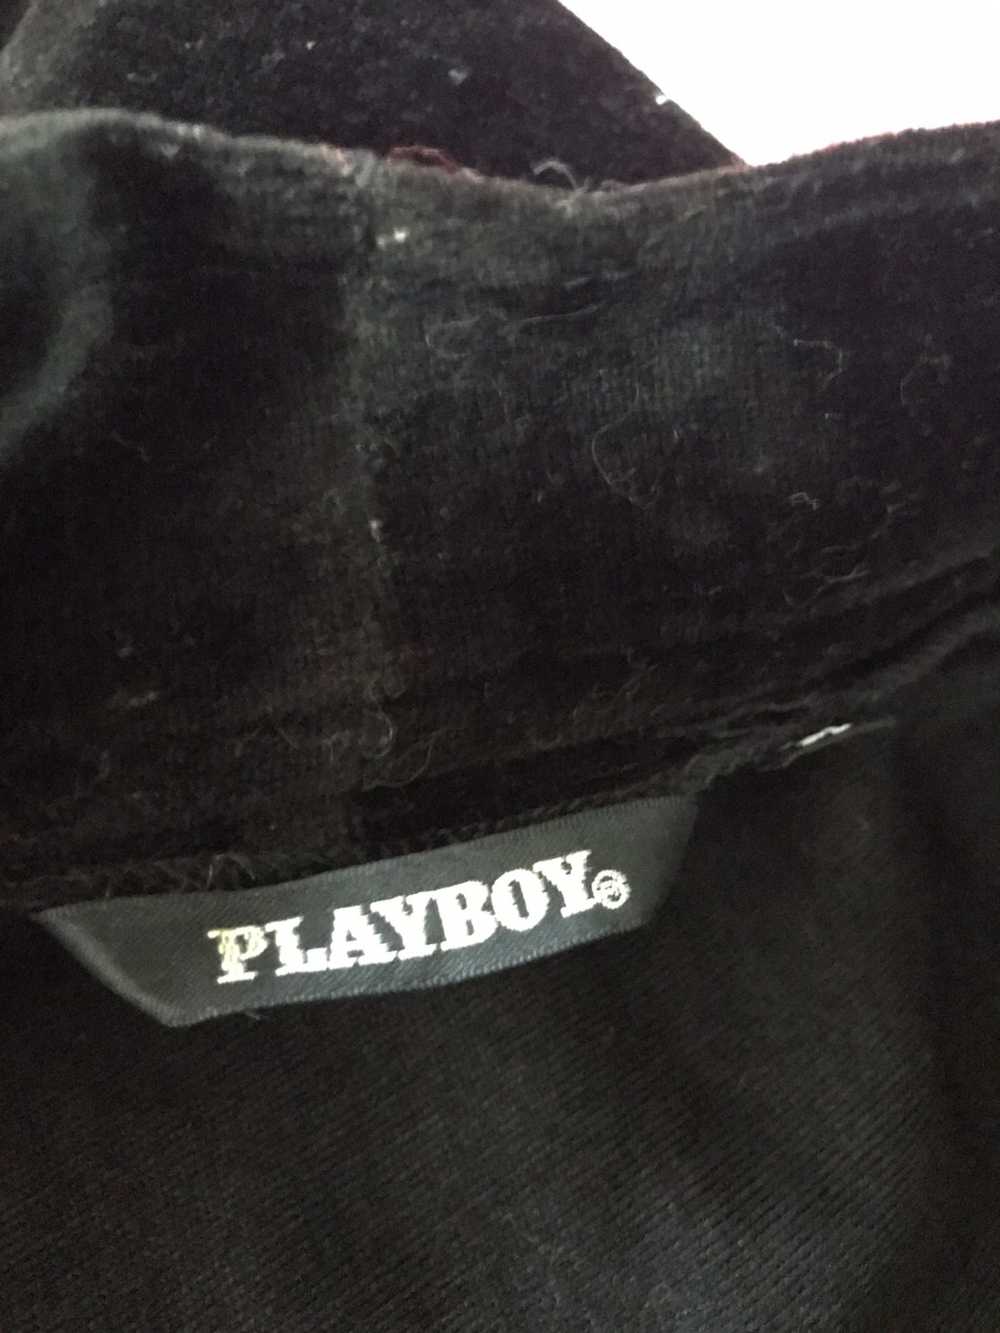 Playboy Playboy sleep wear - image 6